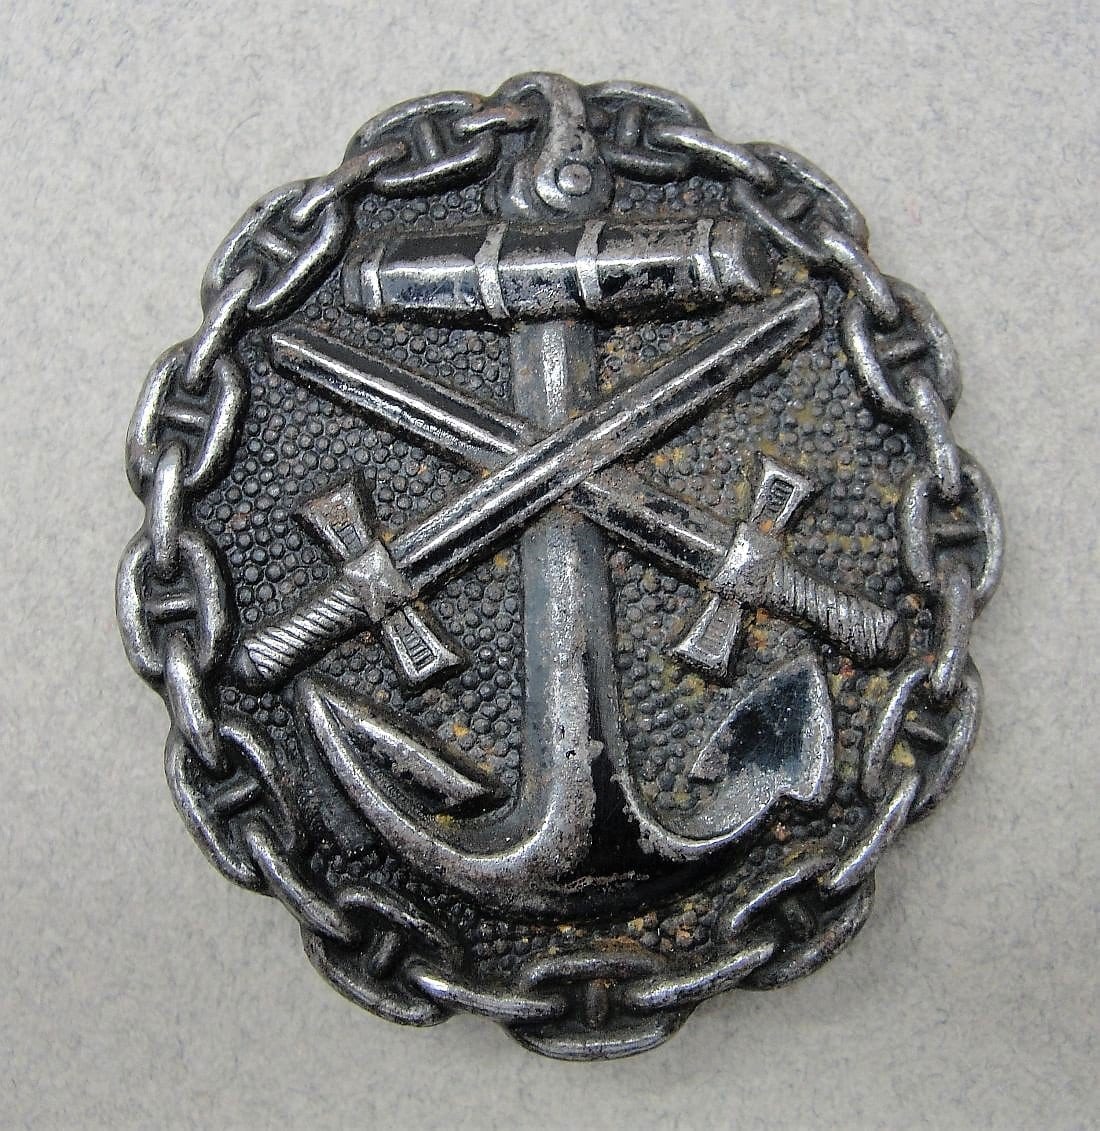 WW1 Naval Wound Badge Black Grade